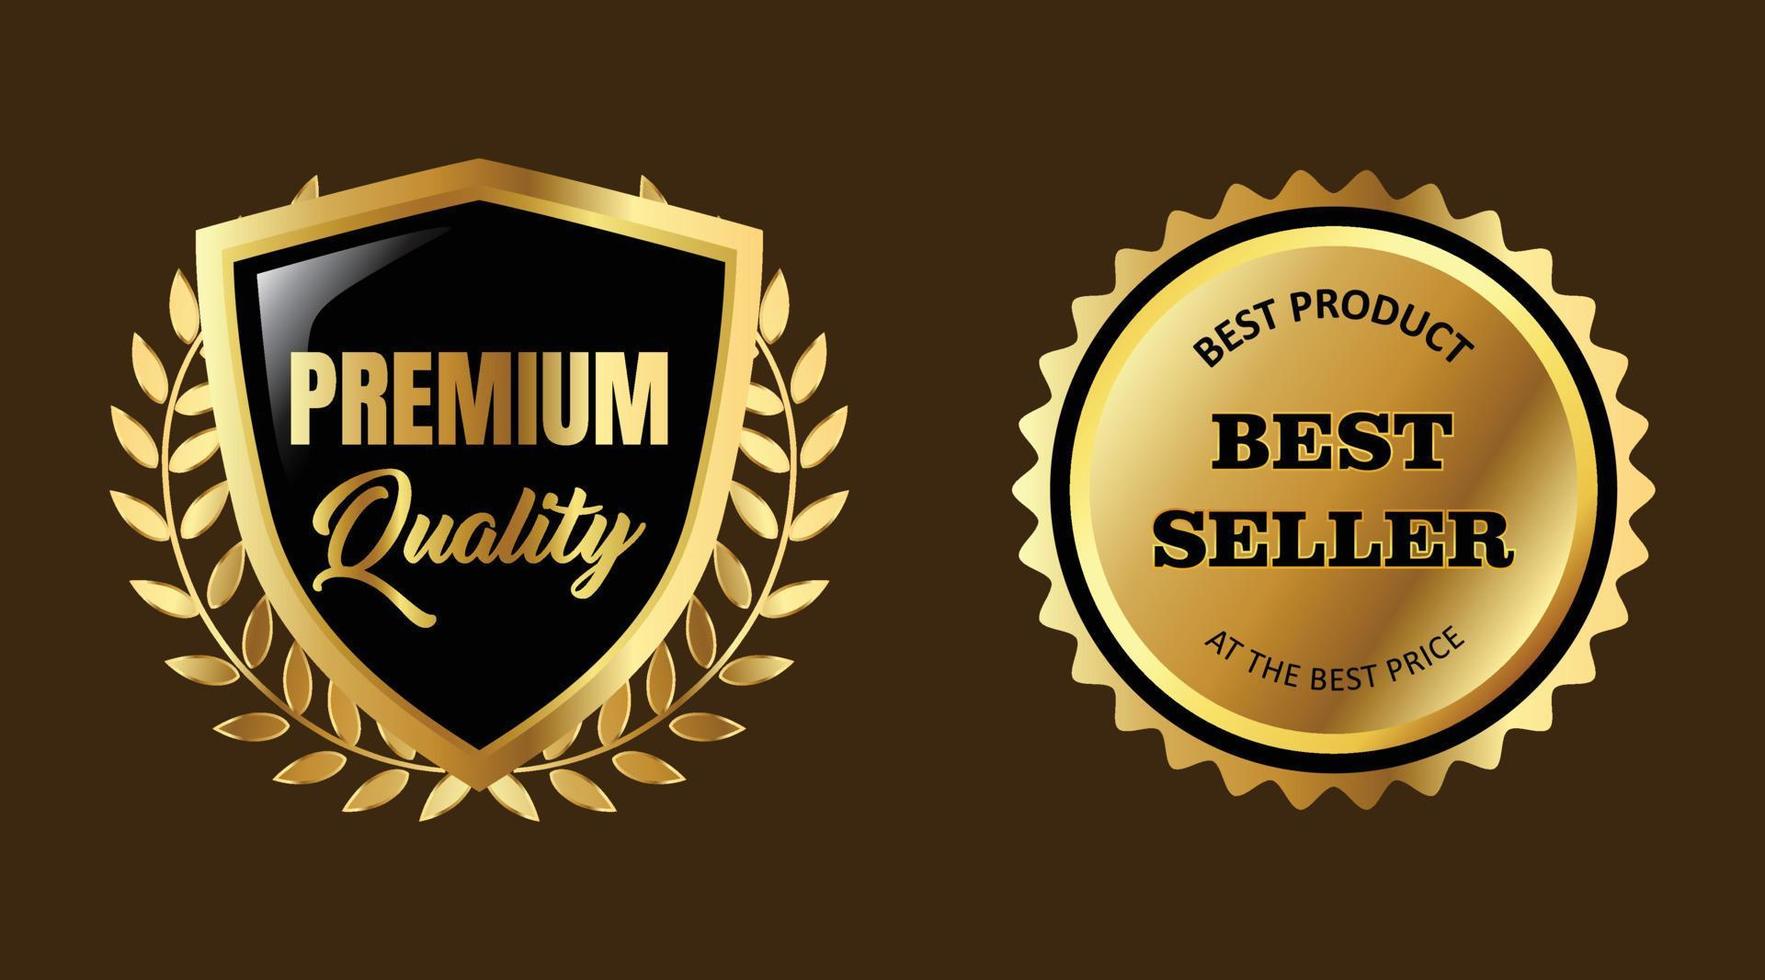 Collection of elegant golden premium best seller labels for business purpose vector